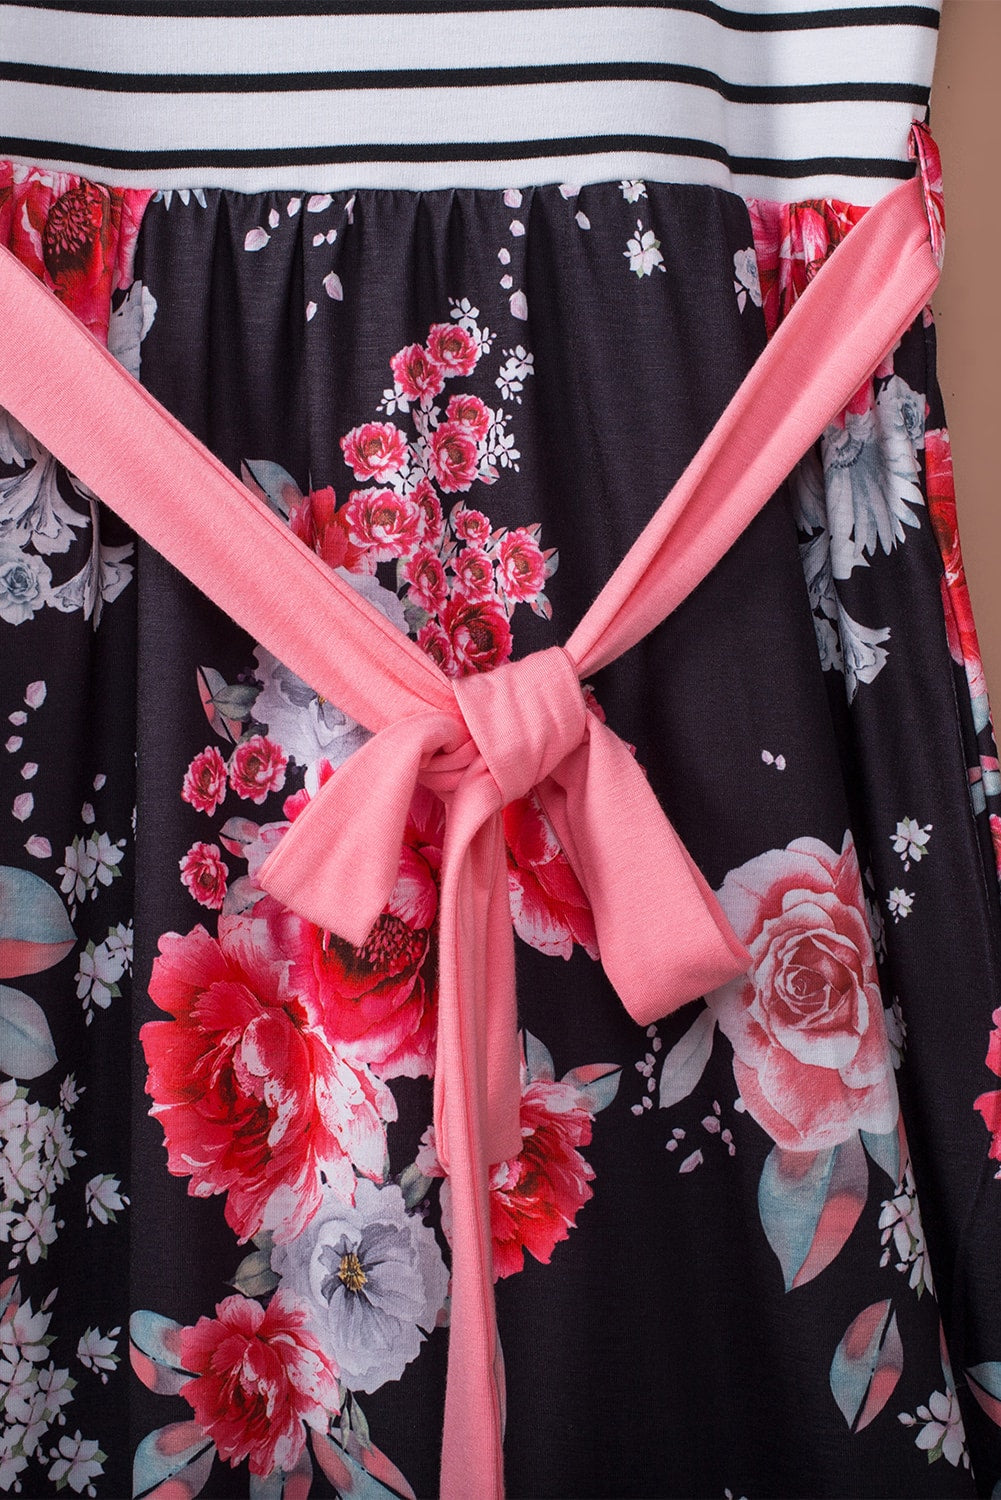 Floral Striped Color Block Lace-Up High Waist Maxi Dress